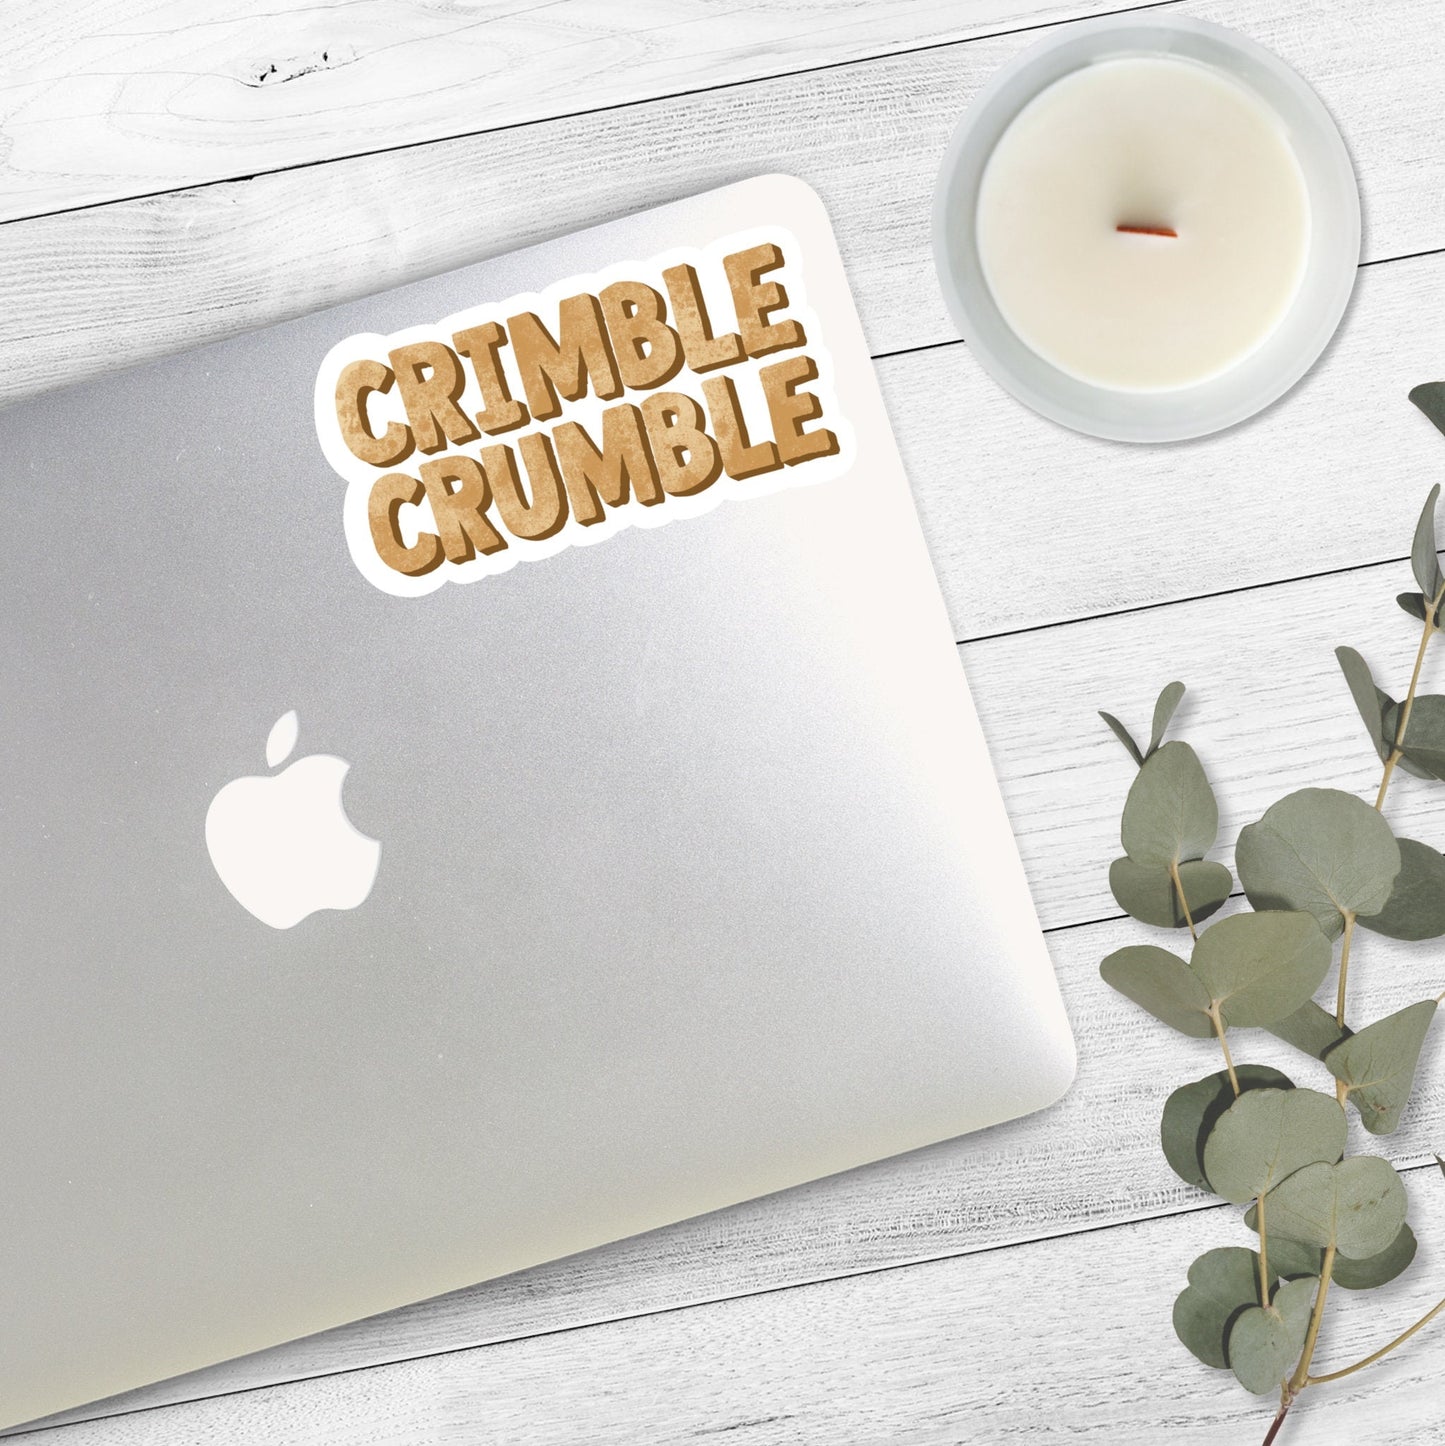 Crimble Crumble  | Jackie Goodman | Friday Night Dinner Stickers